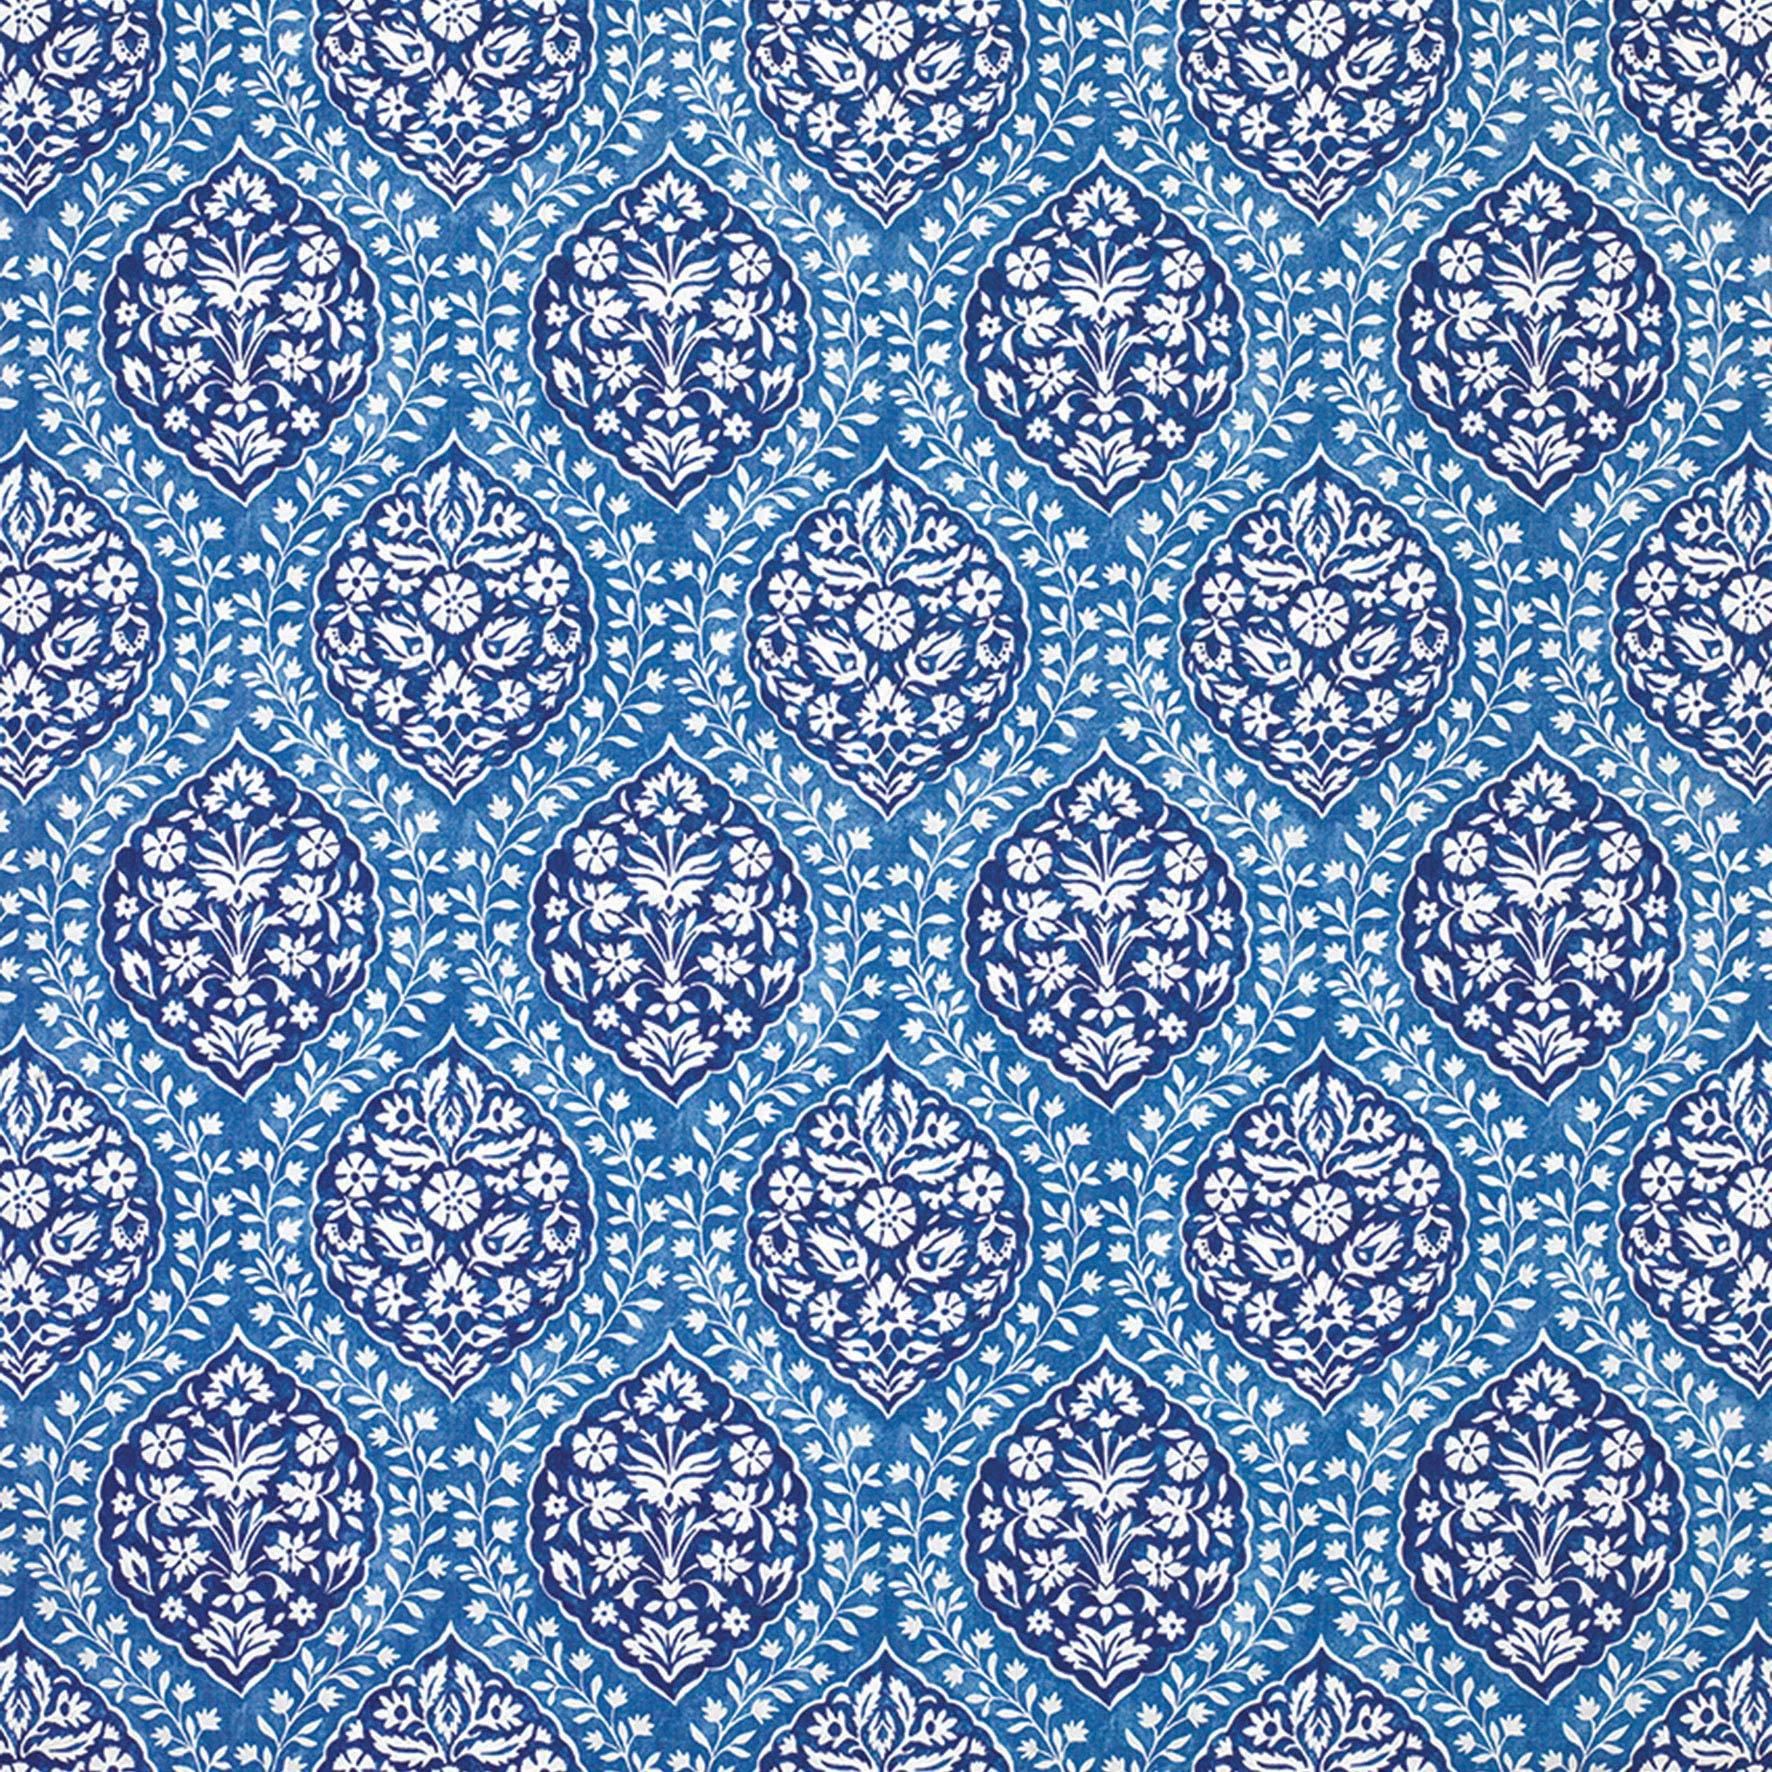 Nina Campbell Fabric - Les Rêves Marguerite Indigo/Blue NCF4294-04